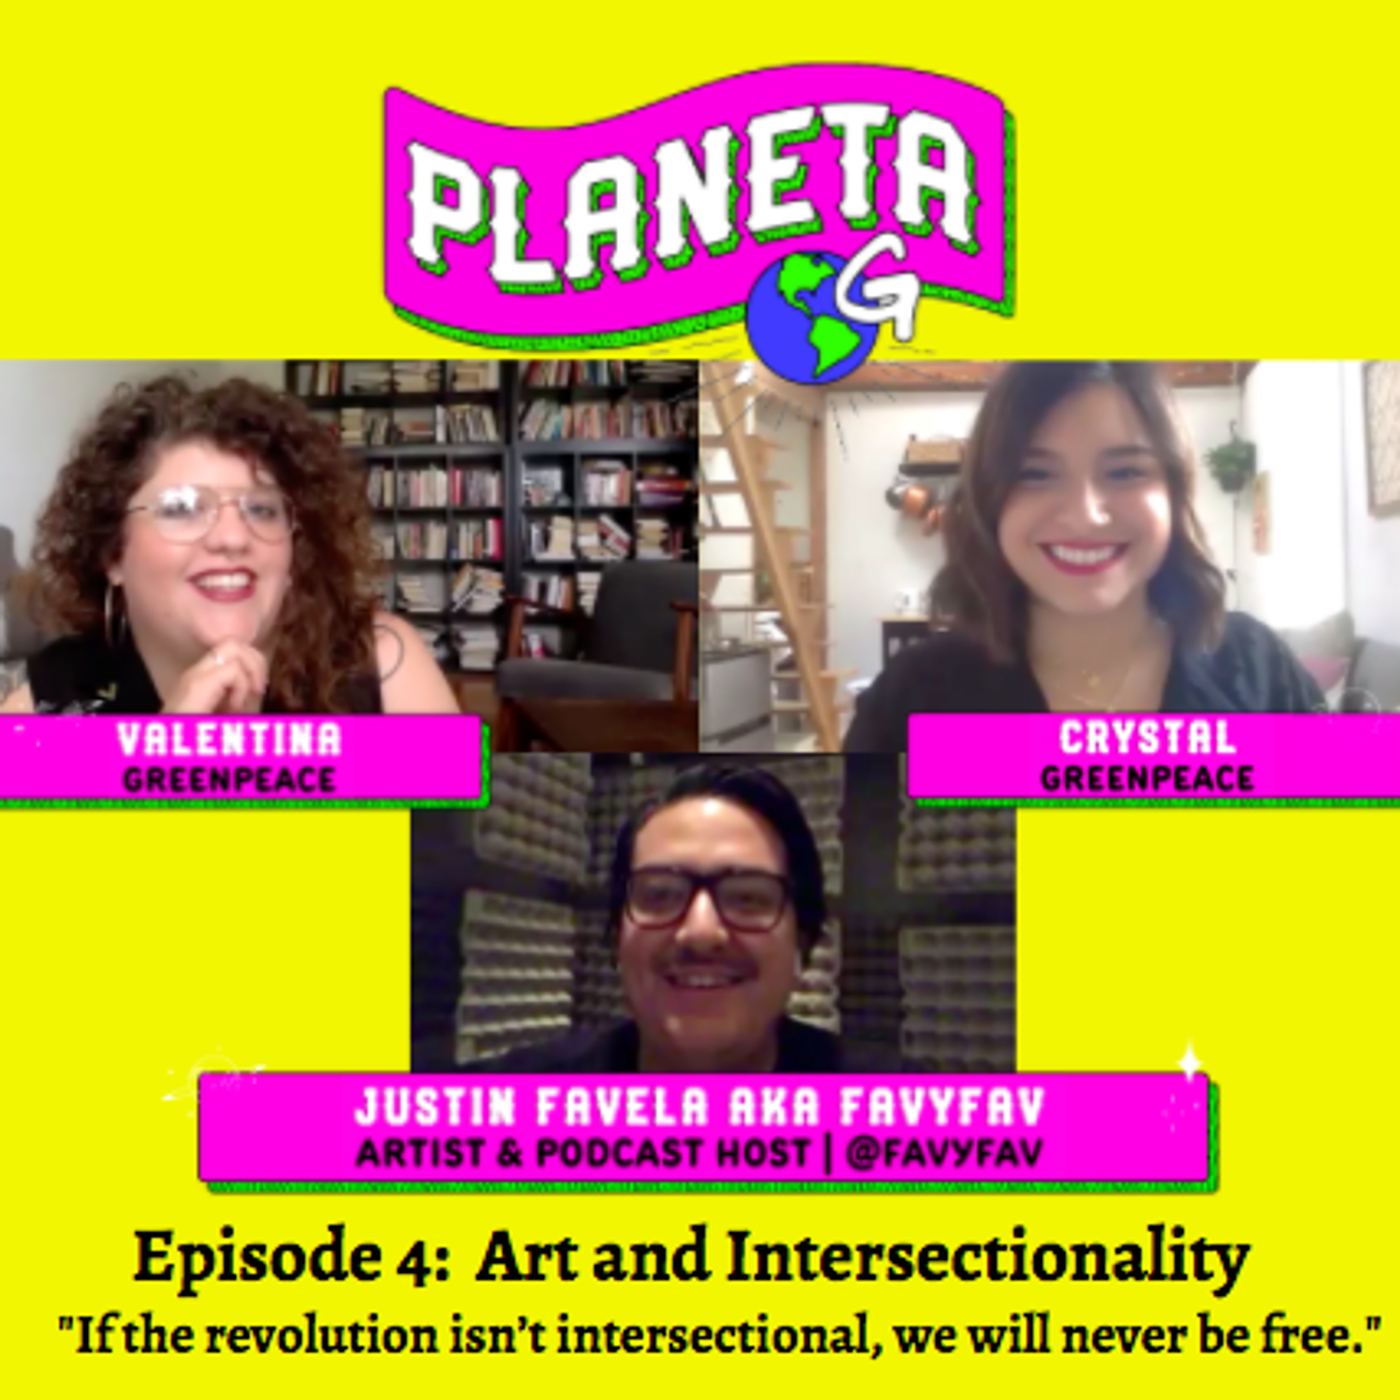 Thumbnail for "Episode 169: FavyFav on Planeta G!".